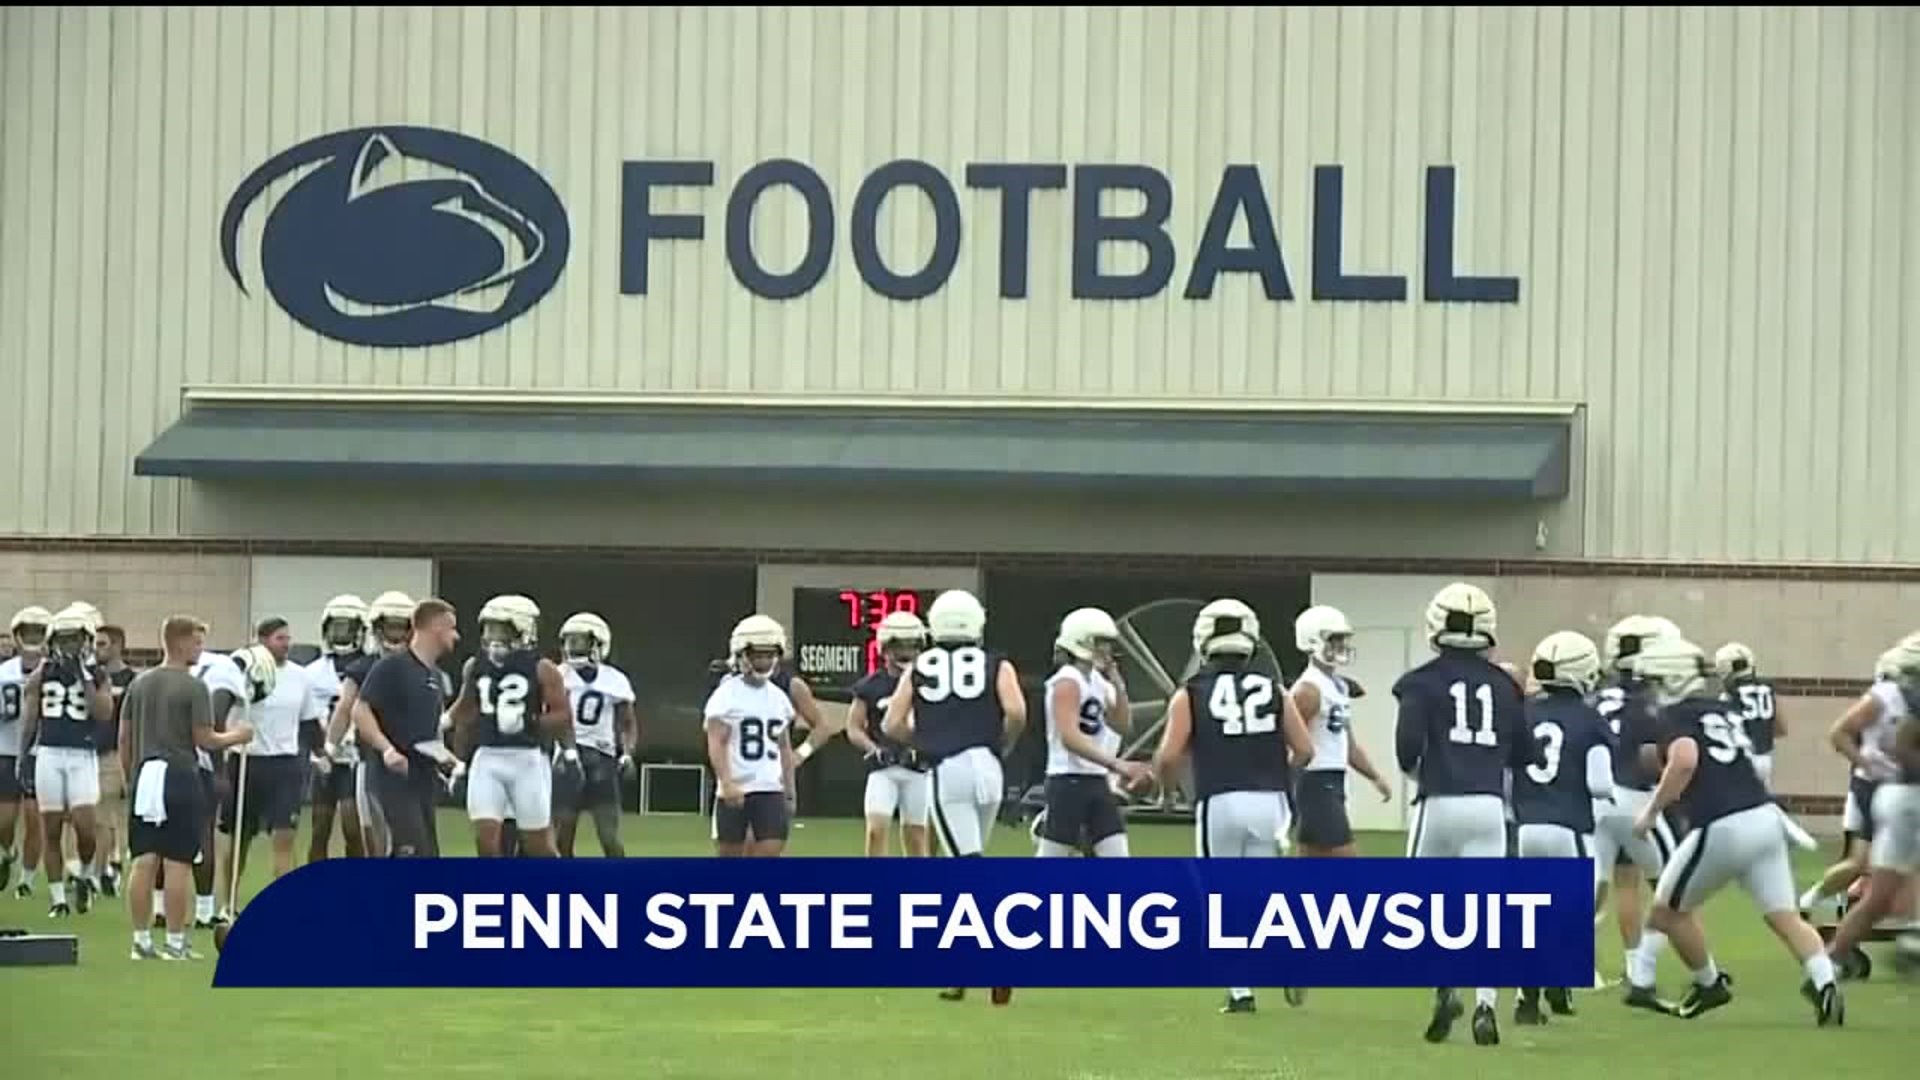 Coach Franklin Defends Penn State Footbal against Lawsuit